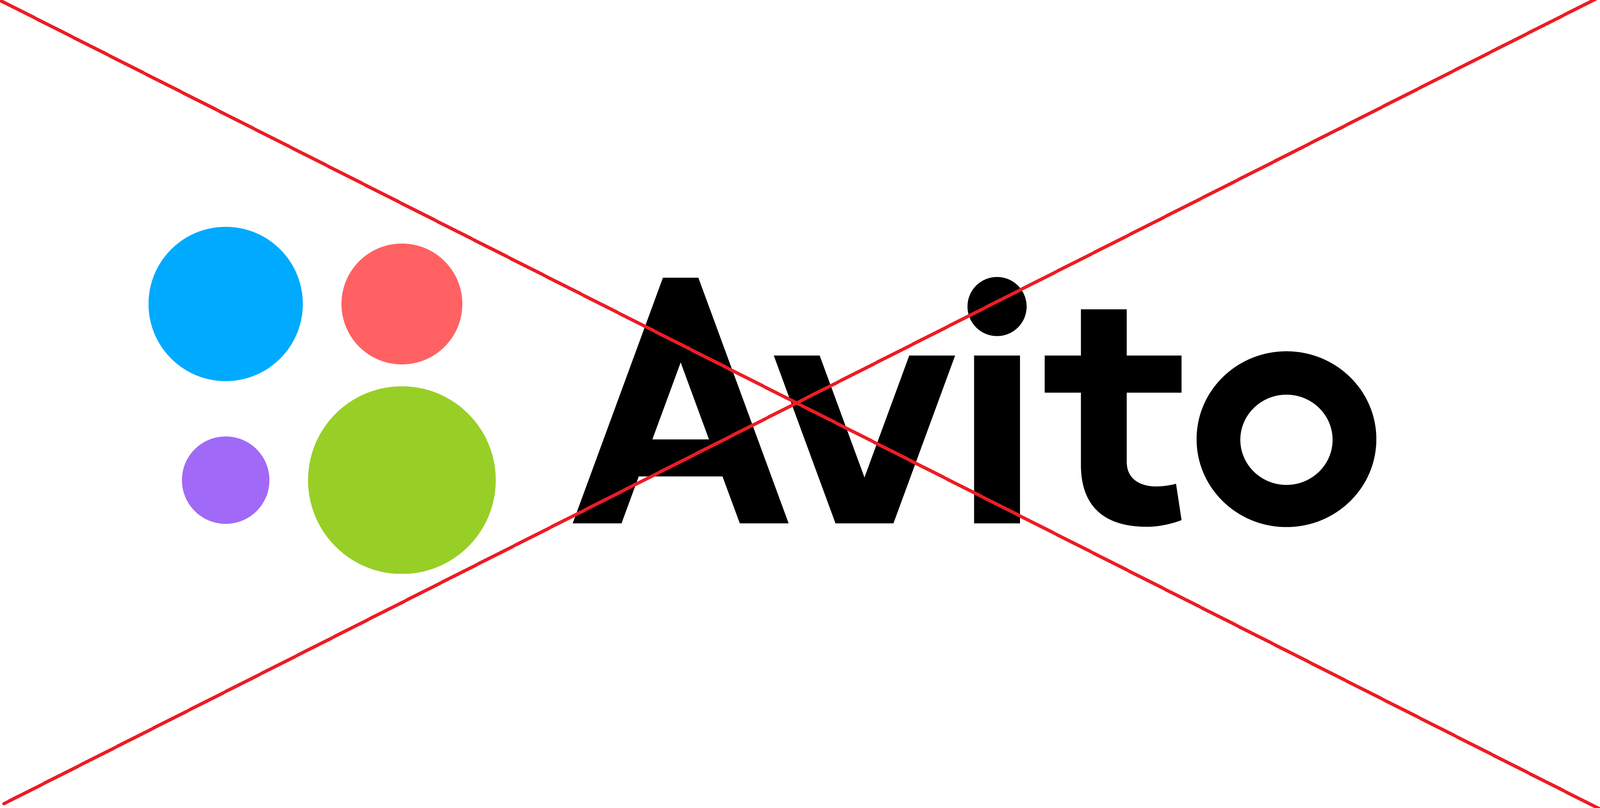 Авито вб. Avito эмблема. Avito логотип прозрачный. Логотип компании авито. Авито натпрозрачном фоне.